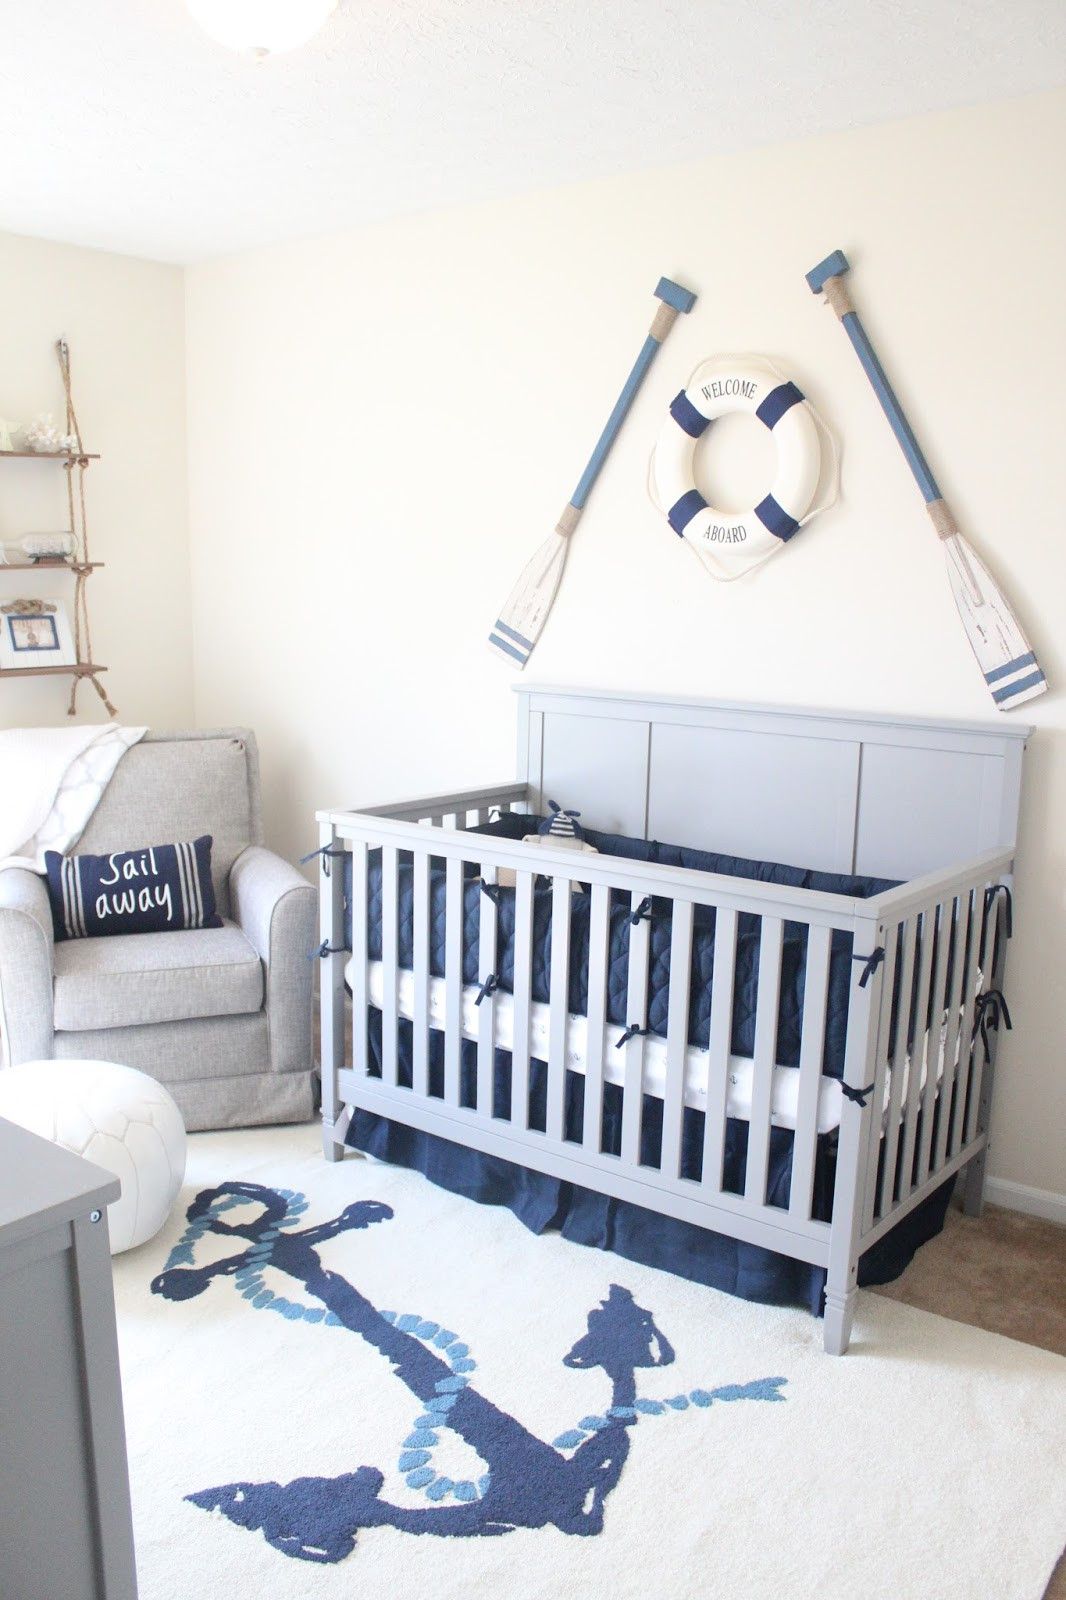 Nautical Baby Boy Room Decor
 KEEP CALM AND CARRY ON Baby 2 s Nautical Nursery